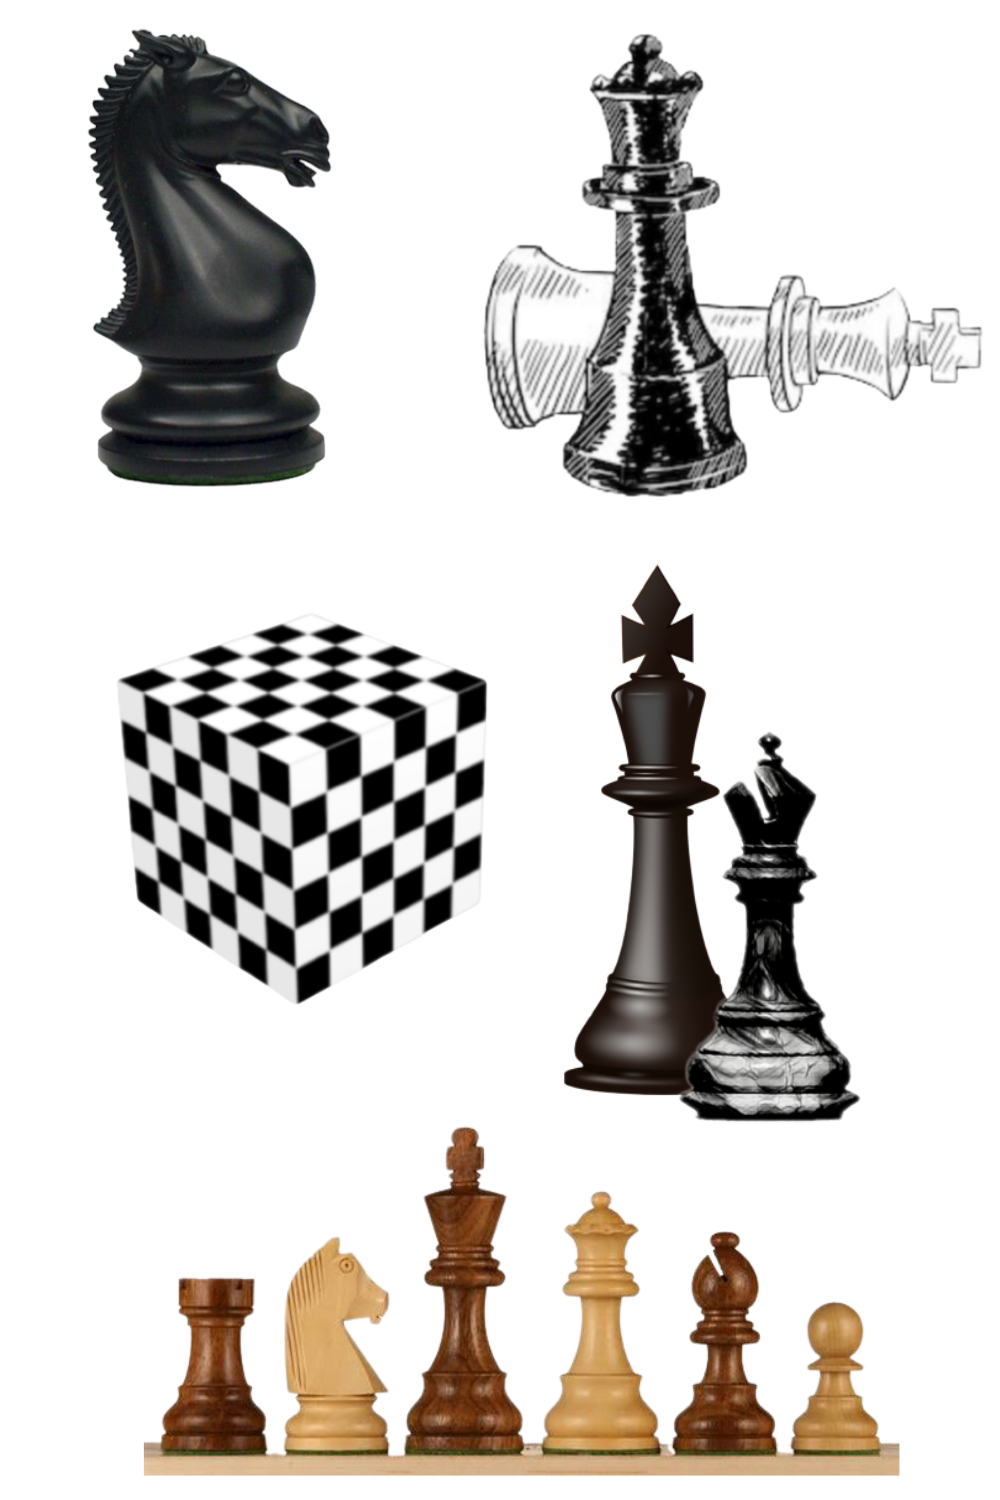 T-shirt Chess Designs pinterest image.